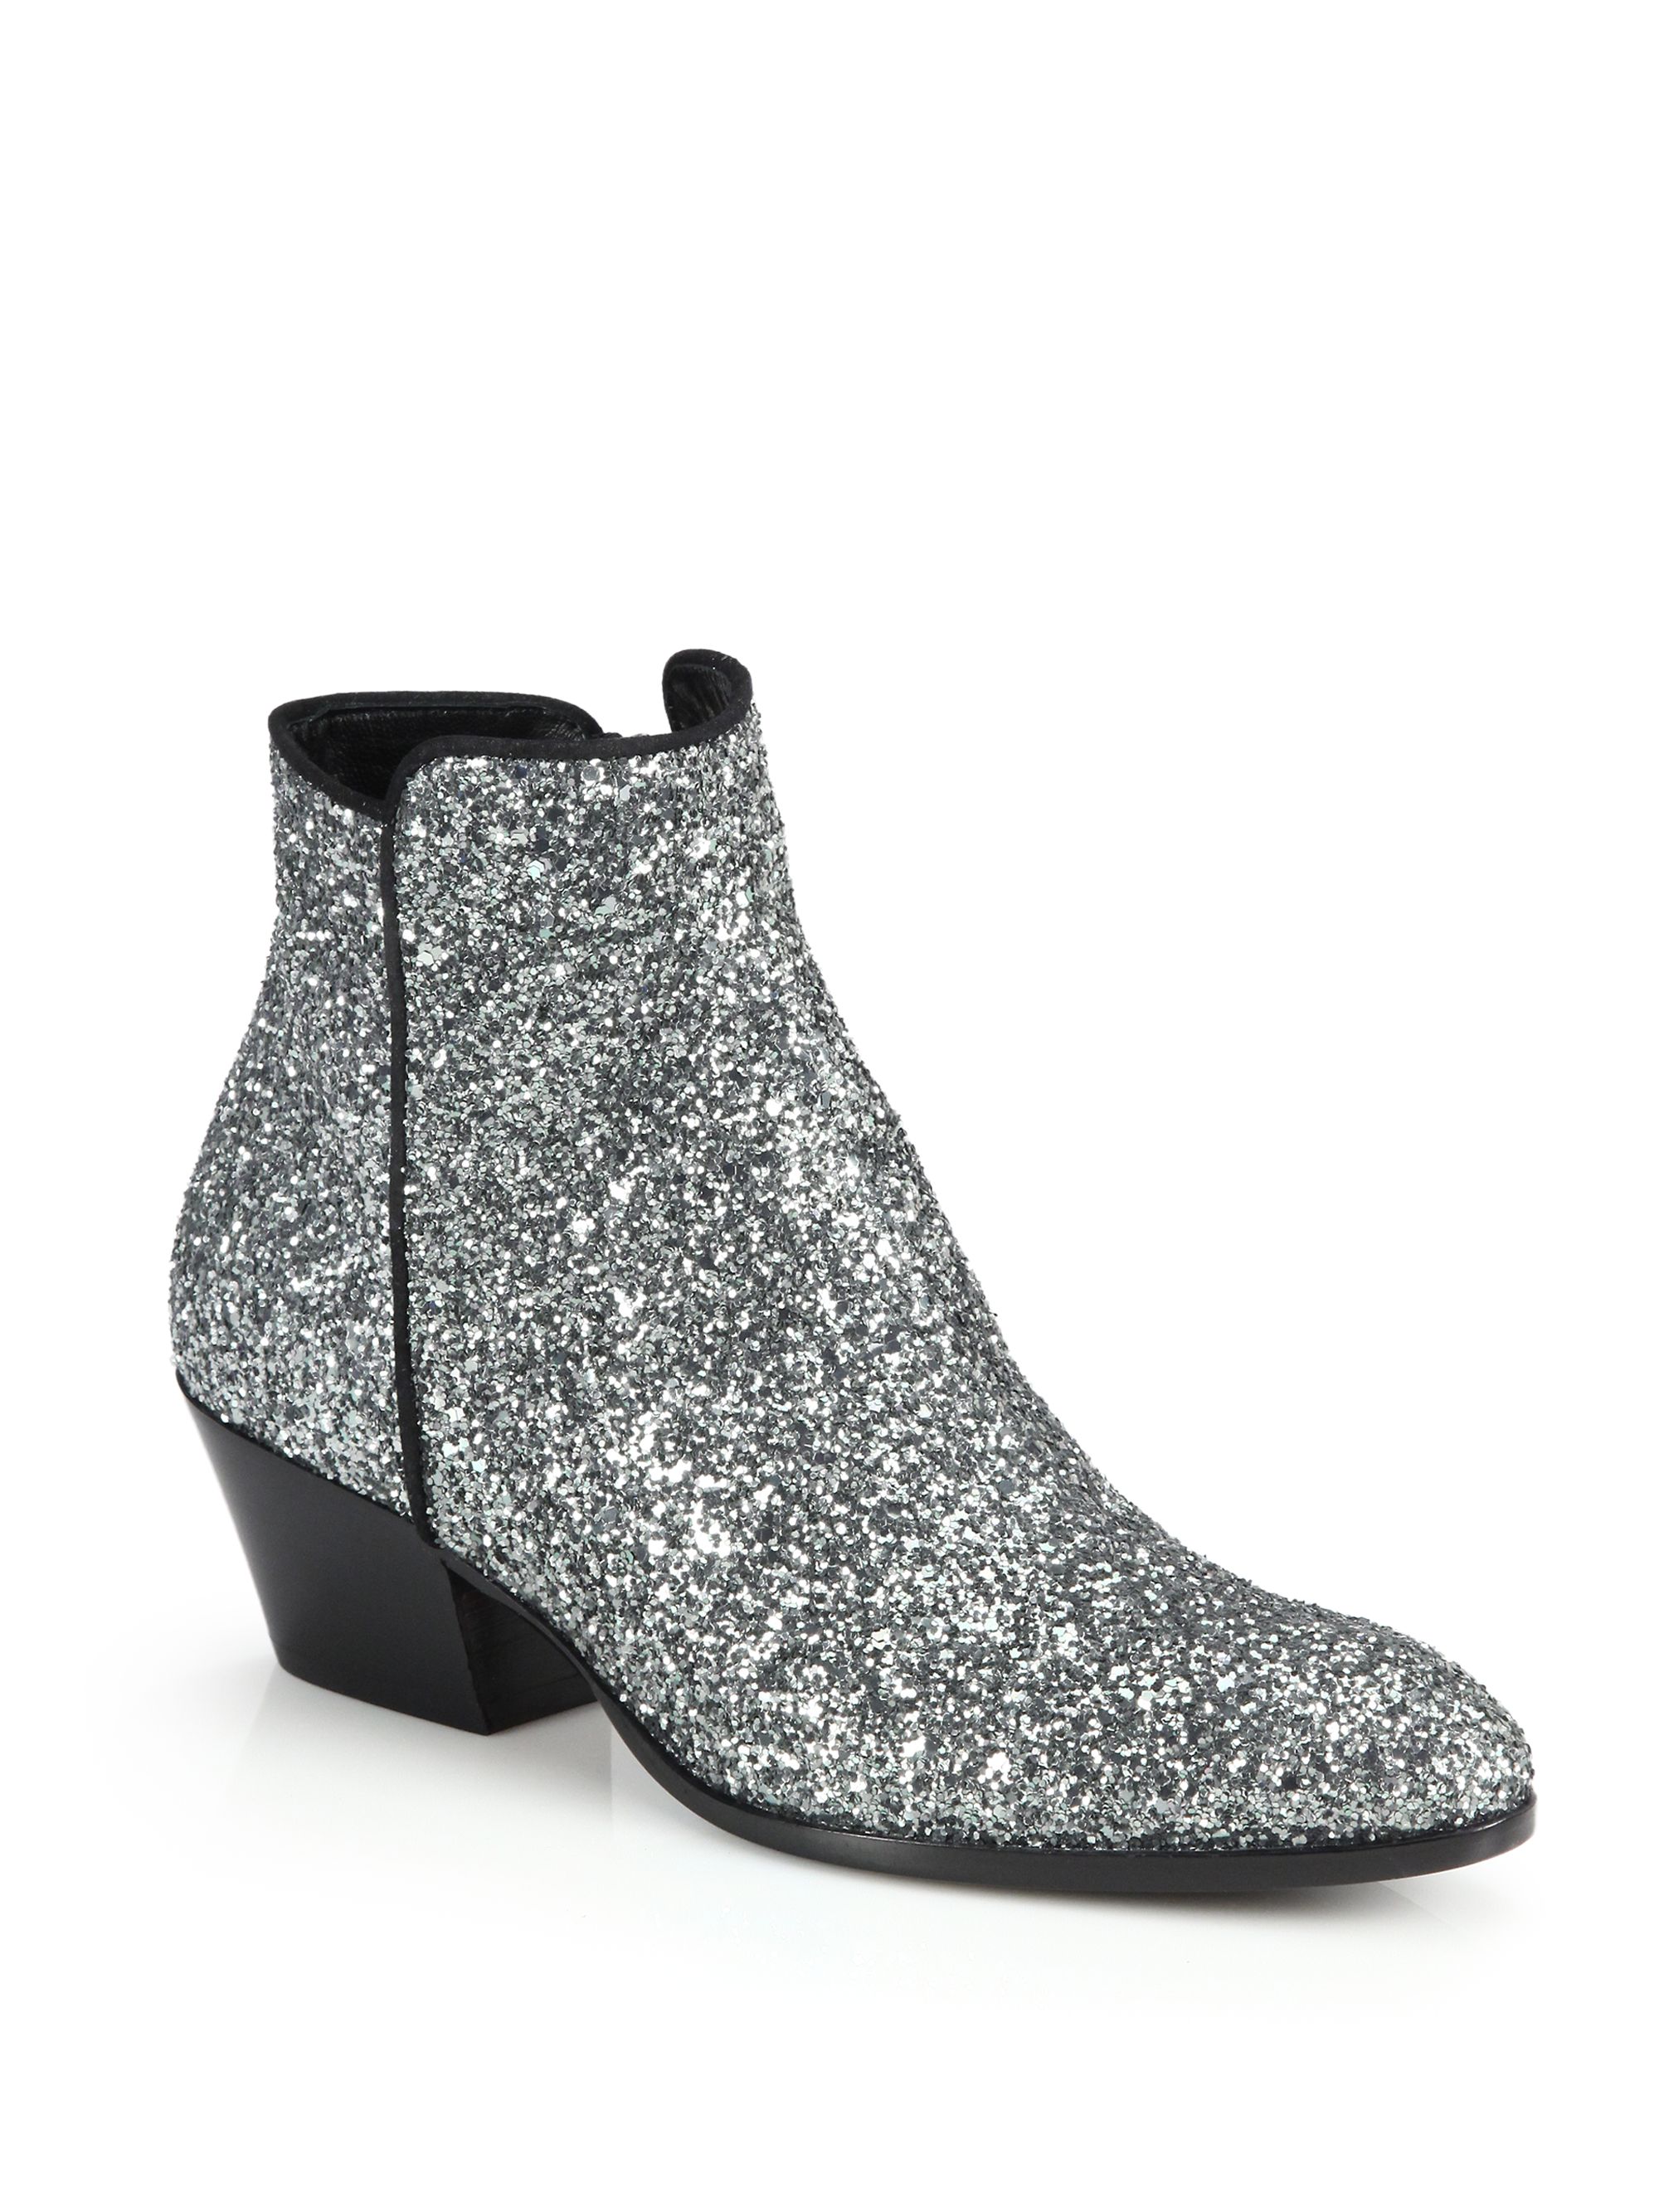 Giuseppe zanotti Glitter Leather Ankle Boots in Metallic | Lyst